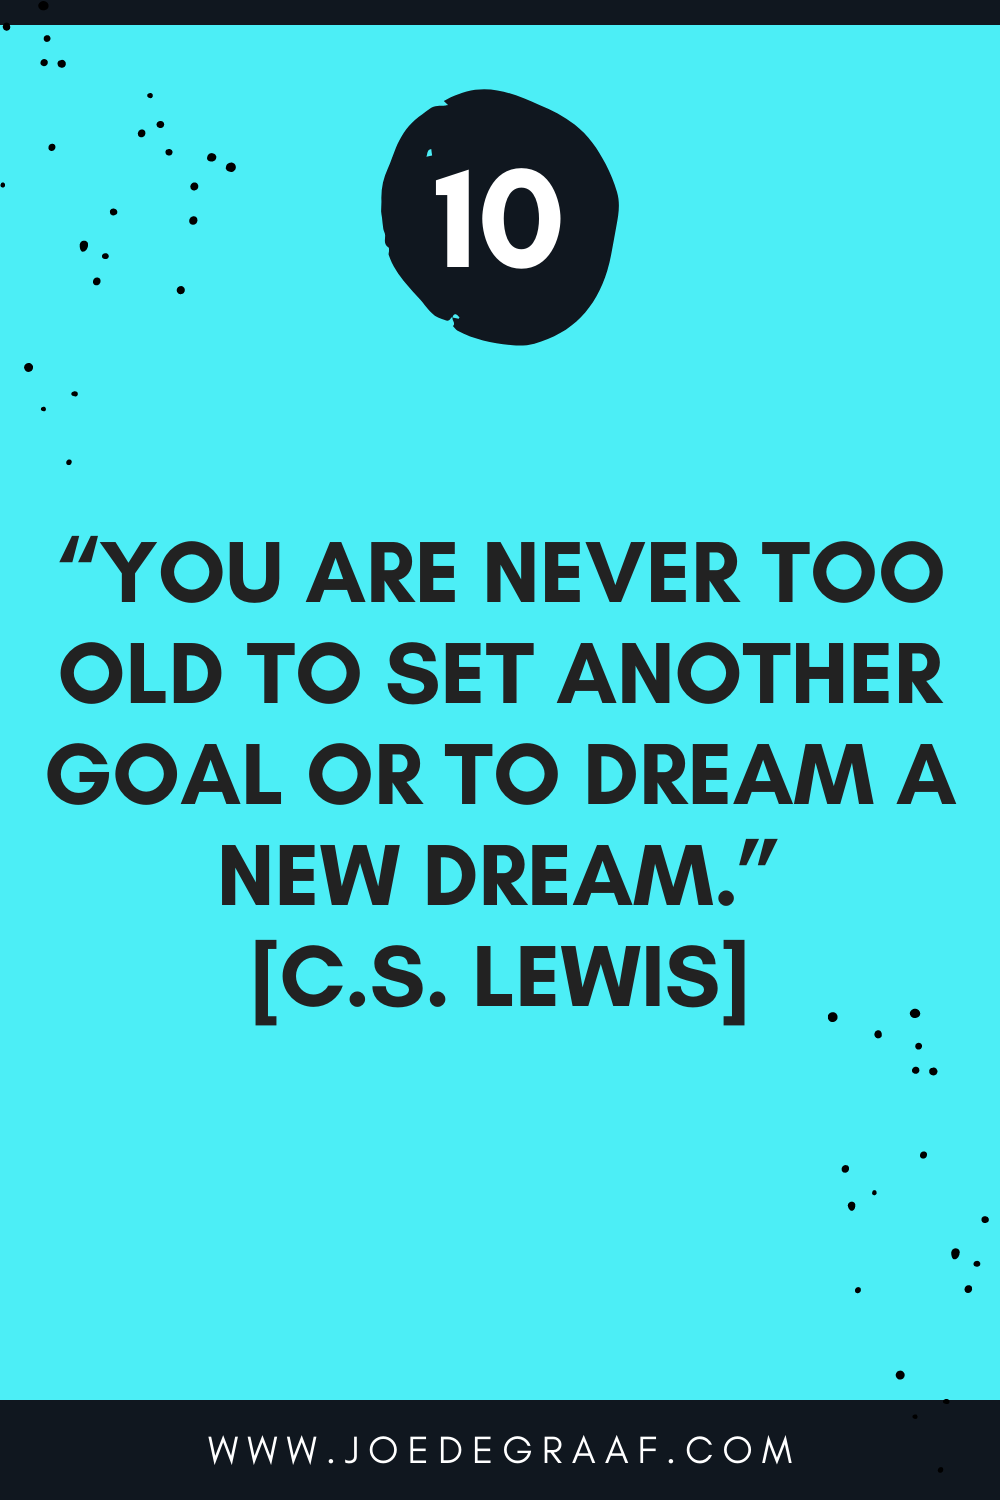 C.S. Lewis quote on work goals